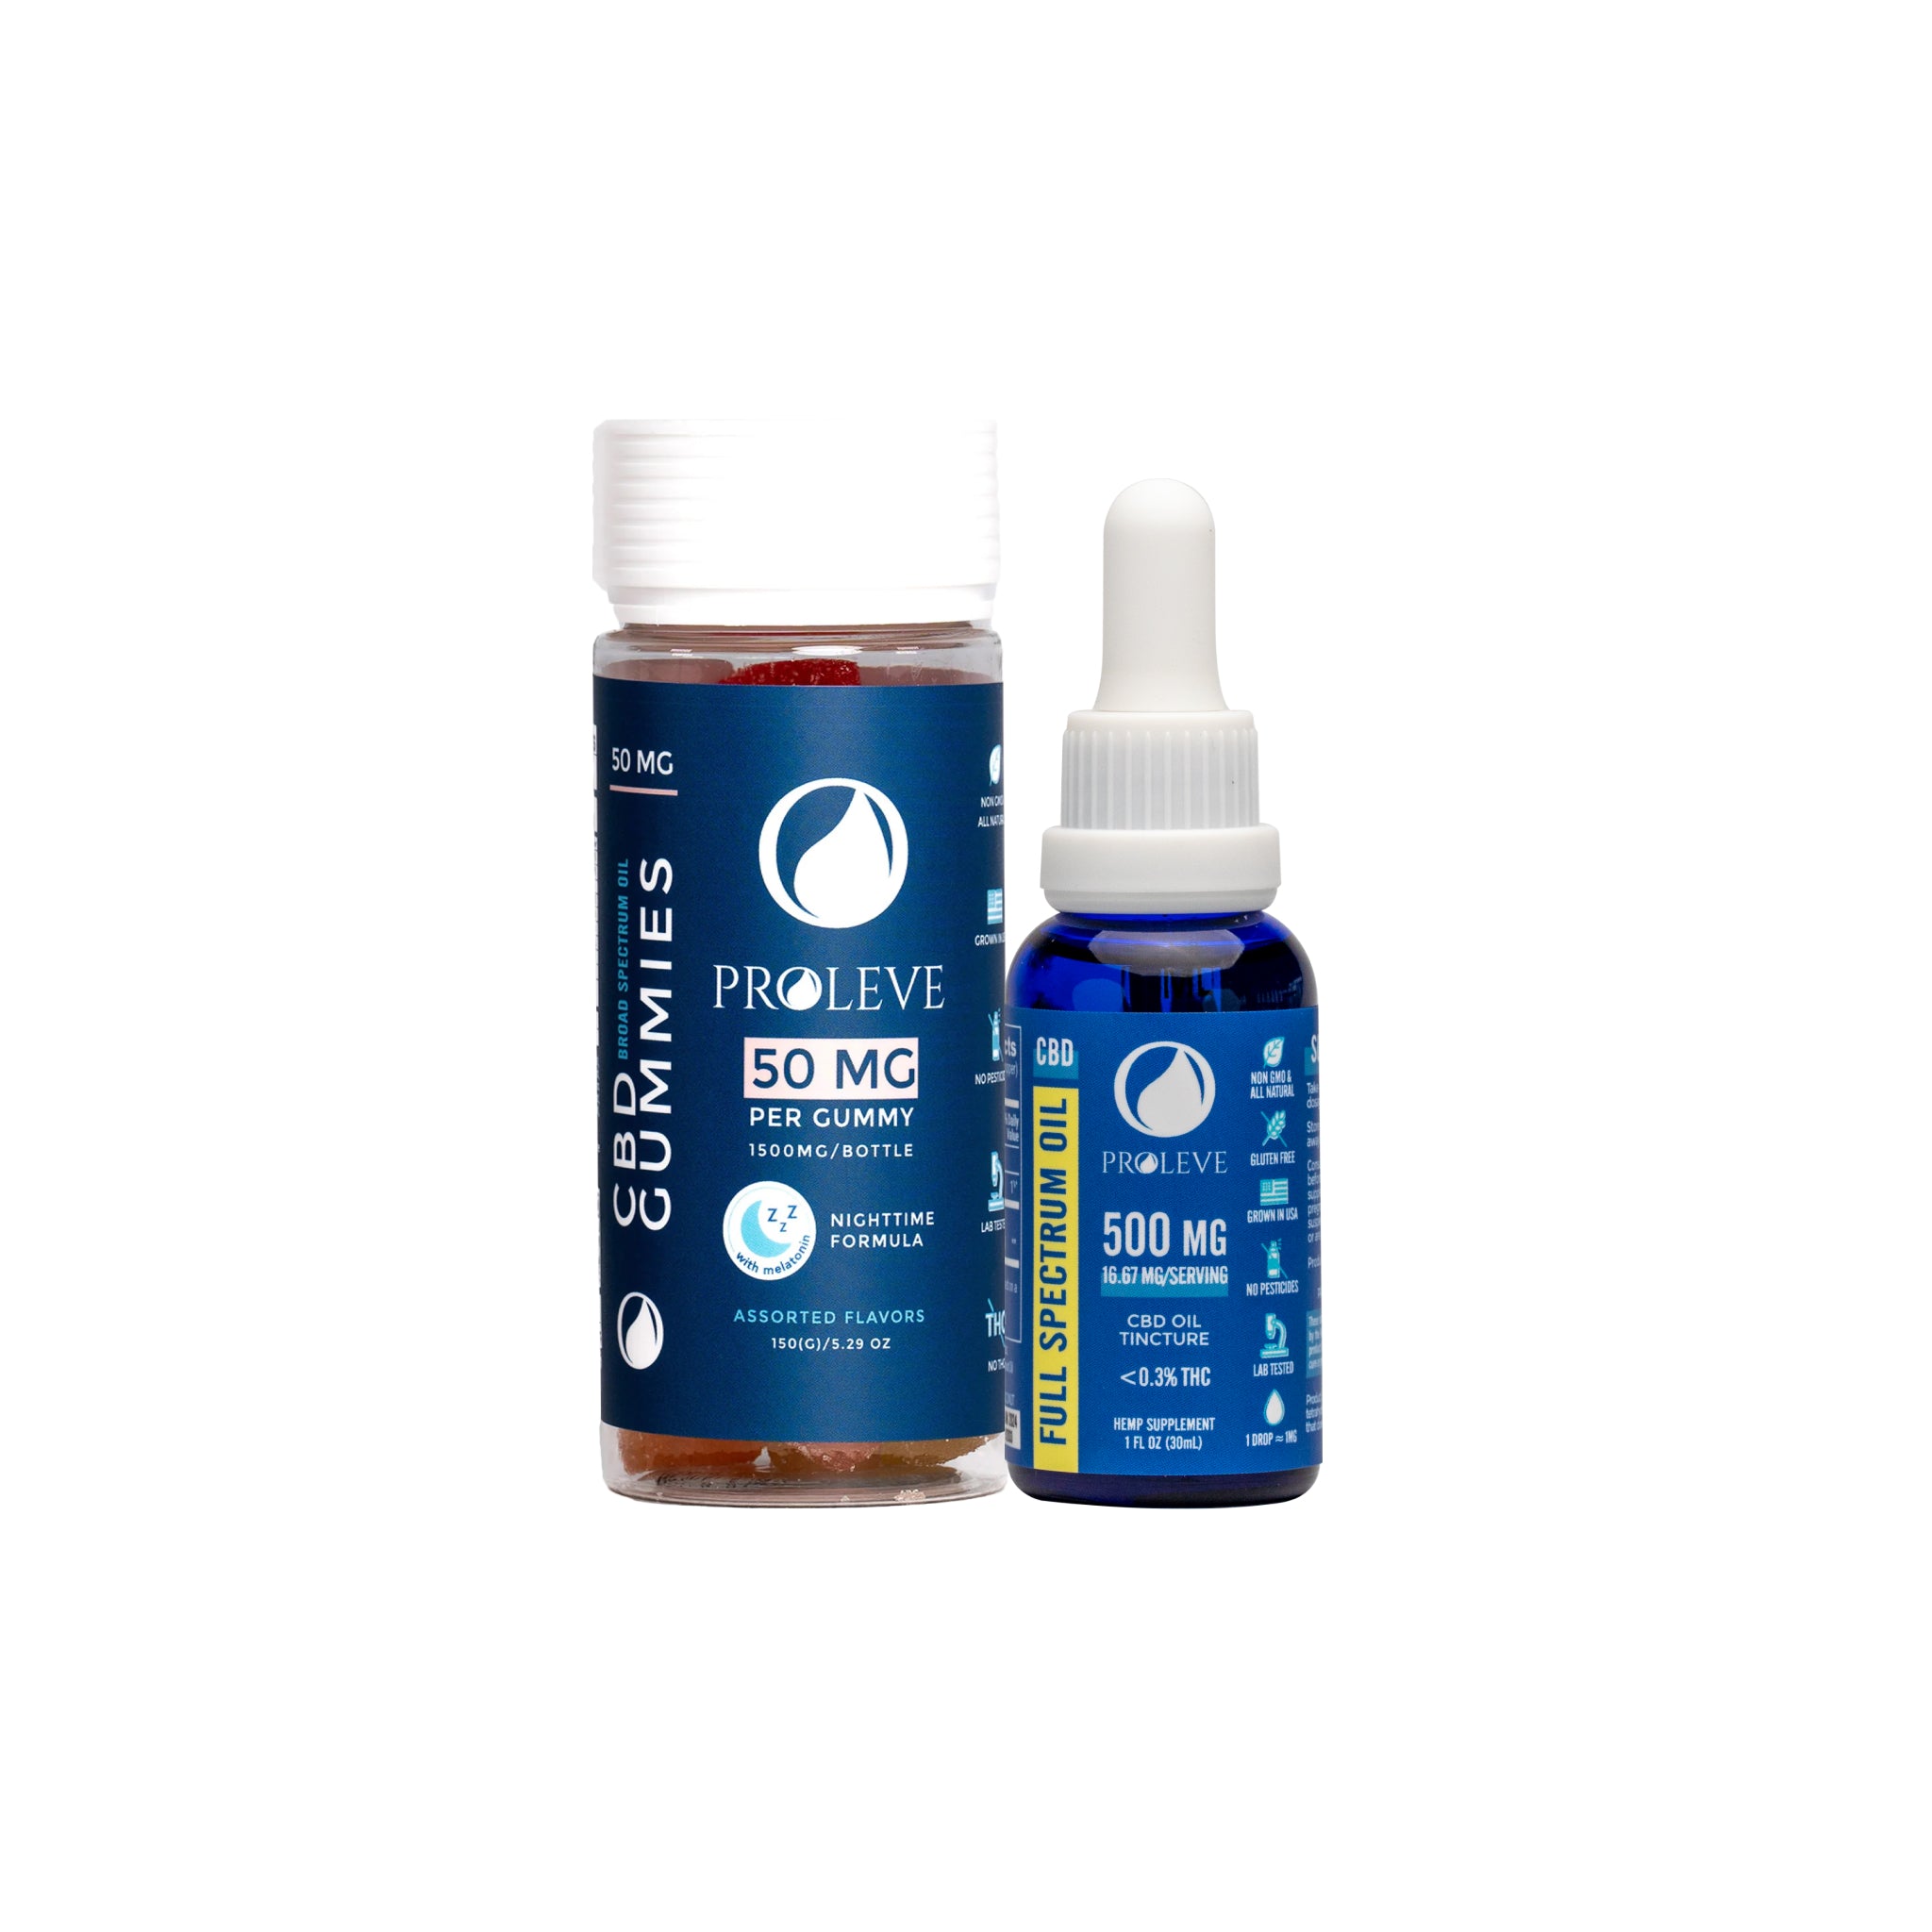 Proleve Best CBD Sleep Bundle: Includes 30 count bottle of PM Sleep Gummies and 500mg CBD Full Spectrum Tincture